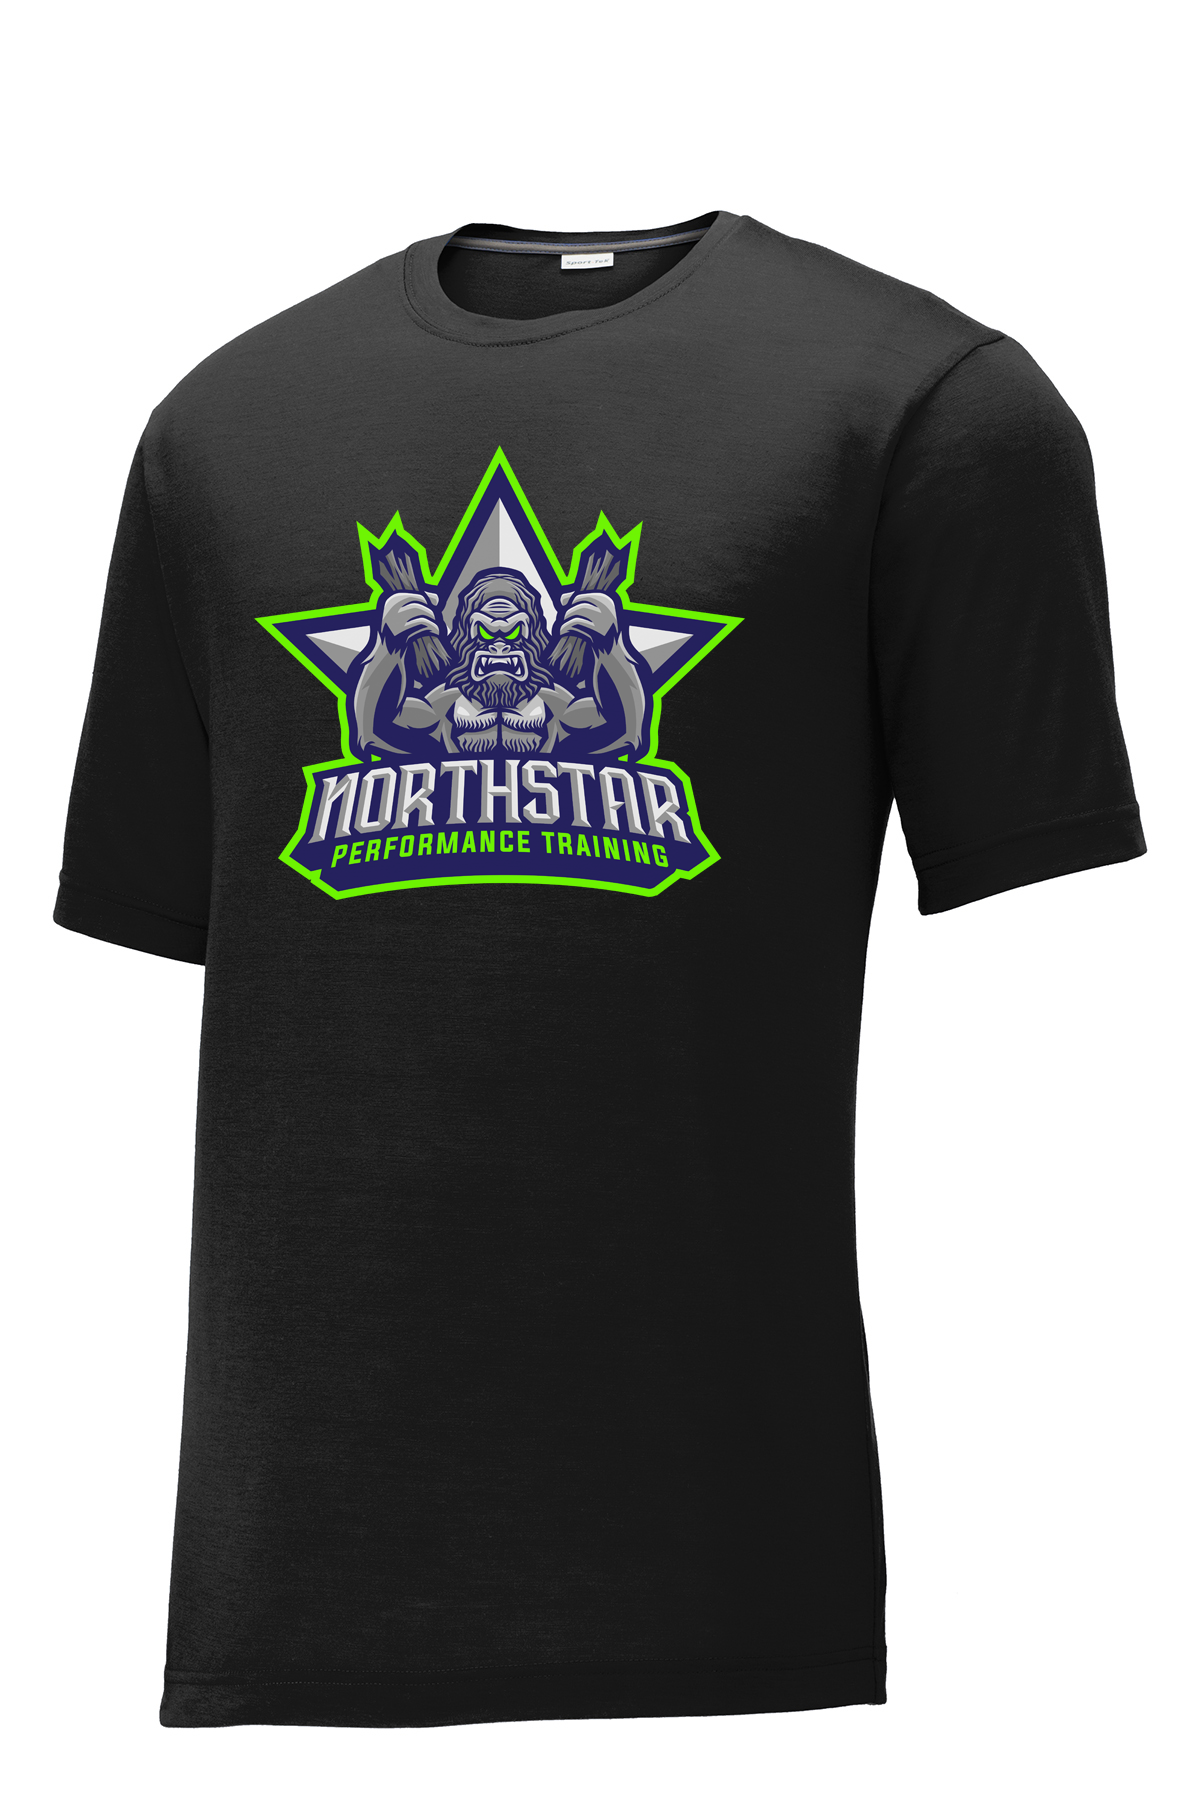 Northstar Performance Training Men's Black CottonTouch Performance T-Shirt